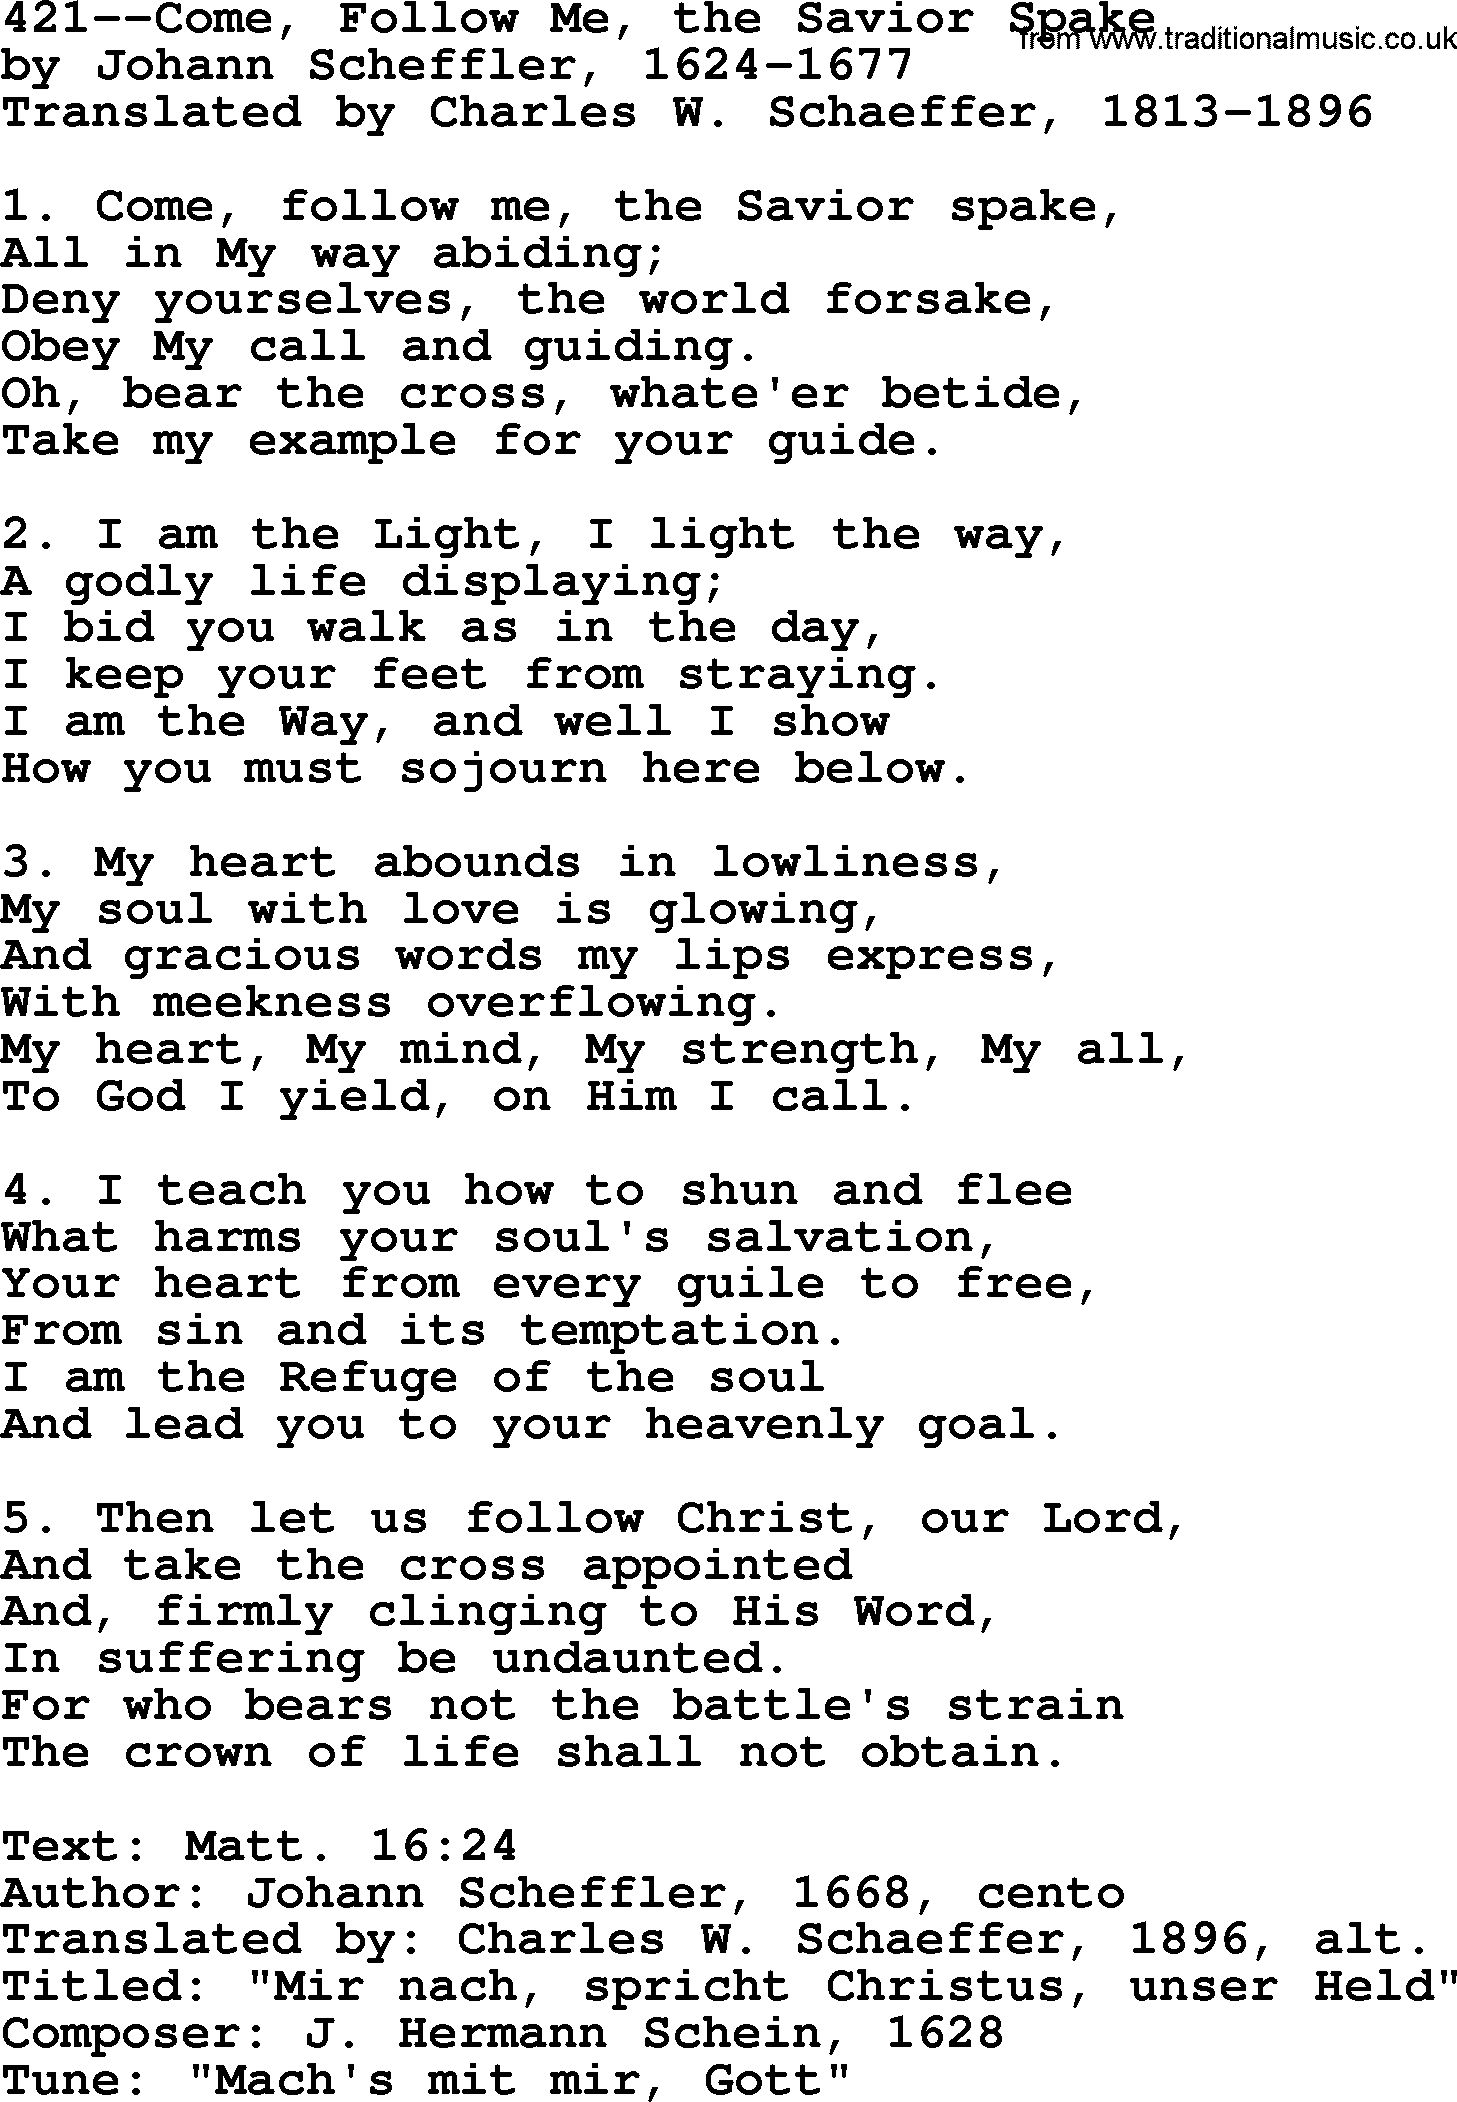 Lutheran Hymn: 421--Come, Follow Me, the Savior Spake.txt lyrics with PDF